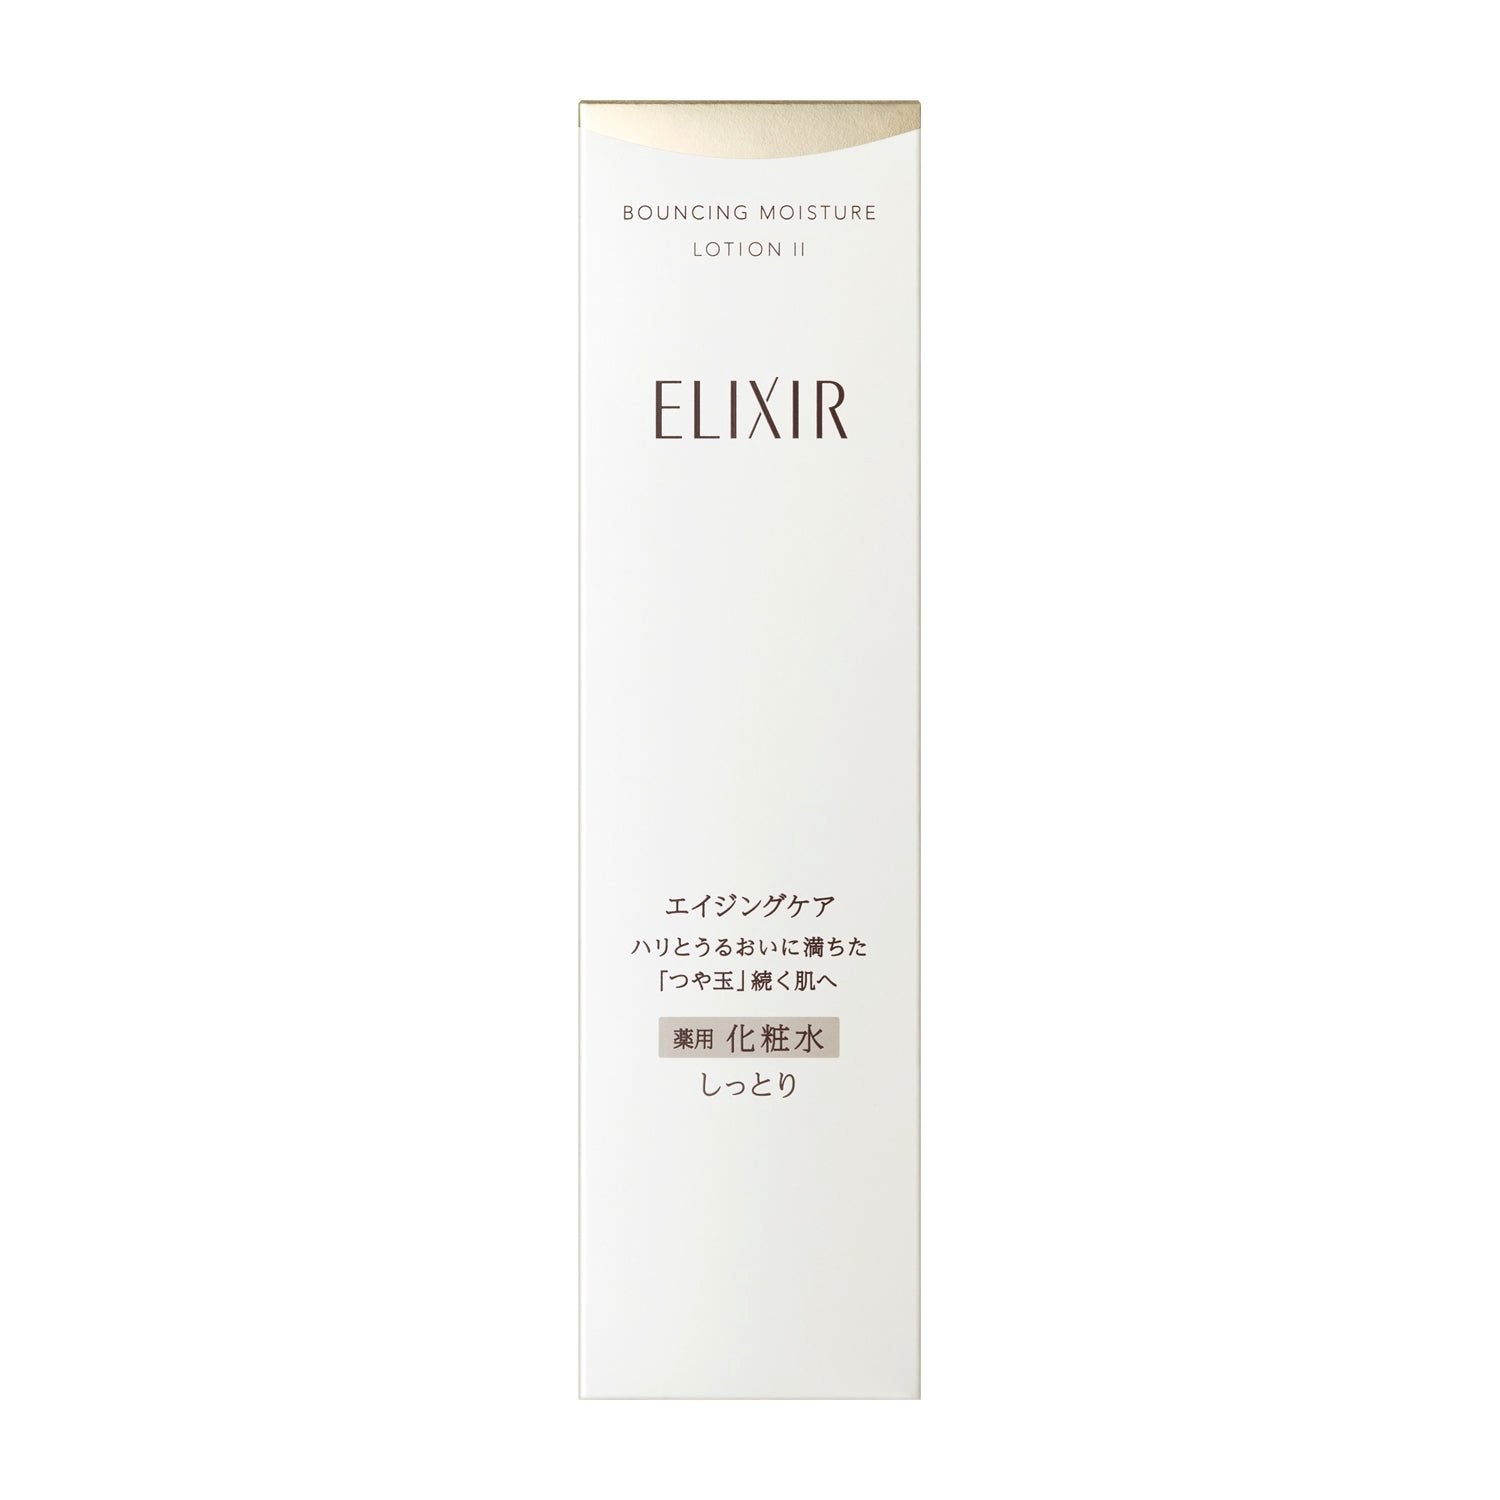 Shiseido Elixir Bouncing Moisture Lotion Anti Aging Lotion 170ml